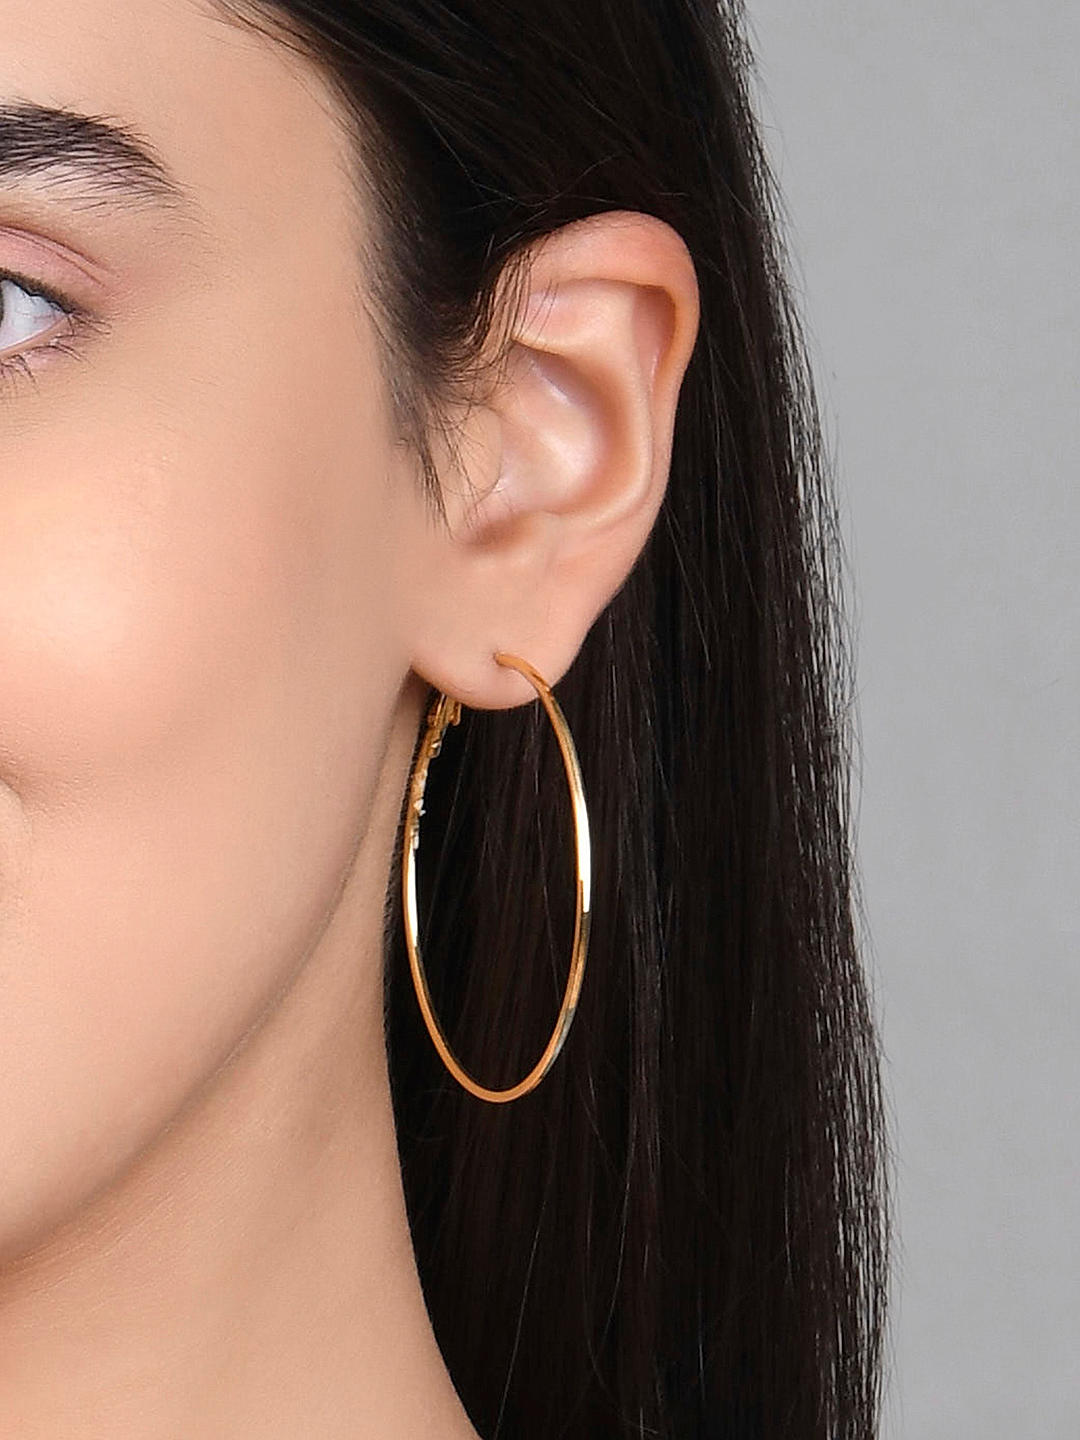 Stylish Gold Plated Hoop Earrings for Women